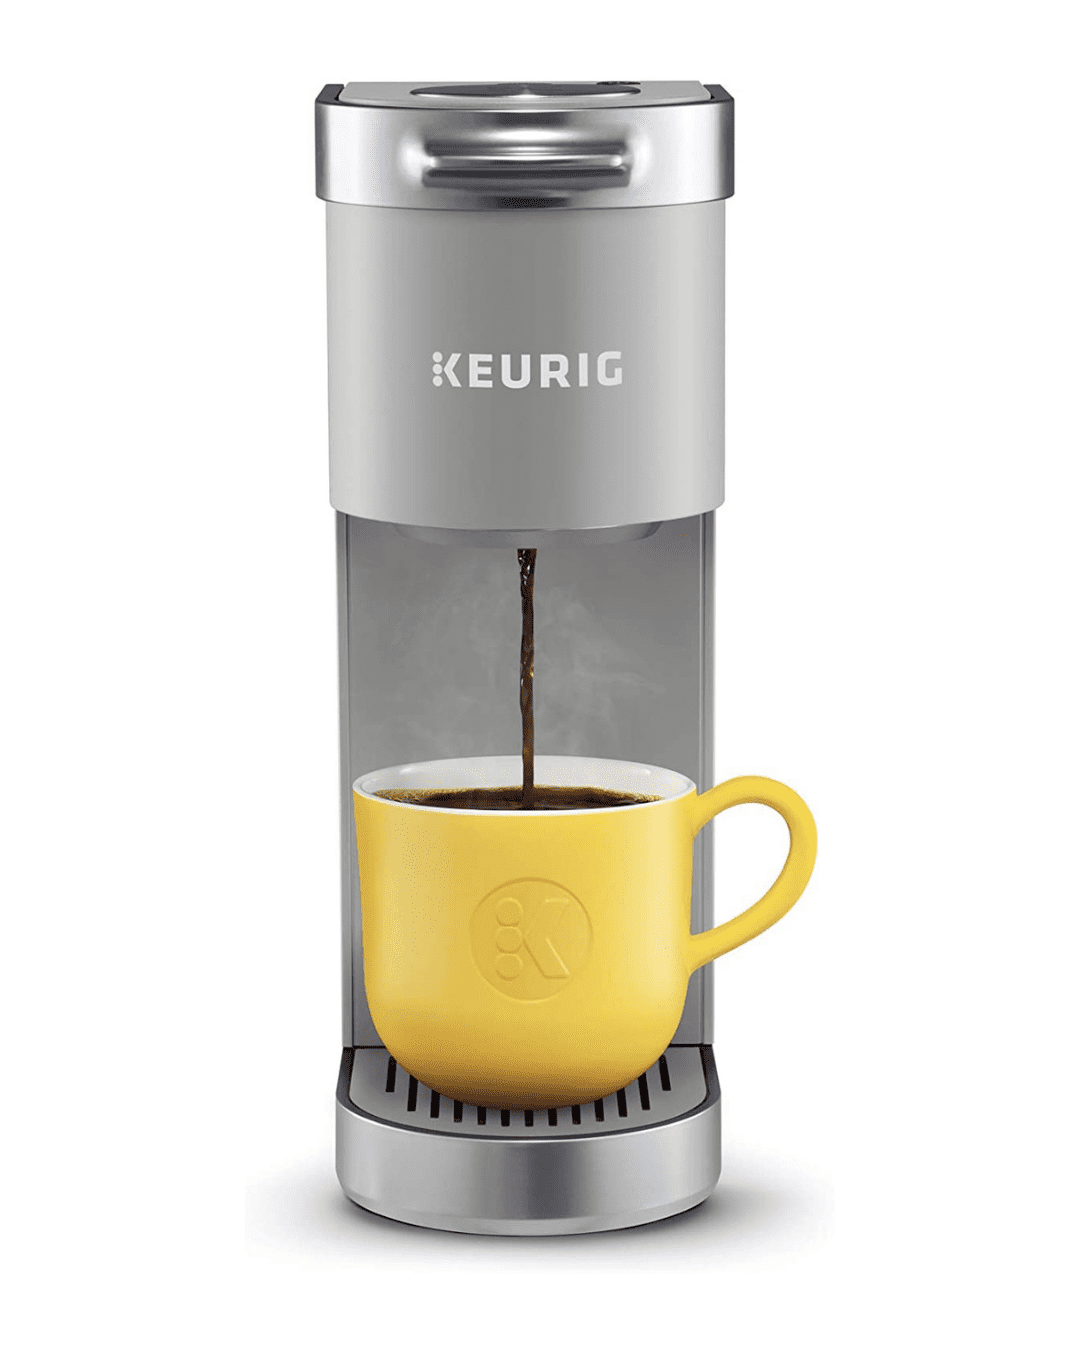 Keurig K-Mini Plus Coffee Maker